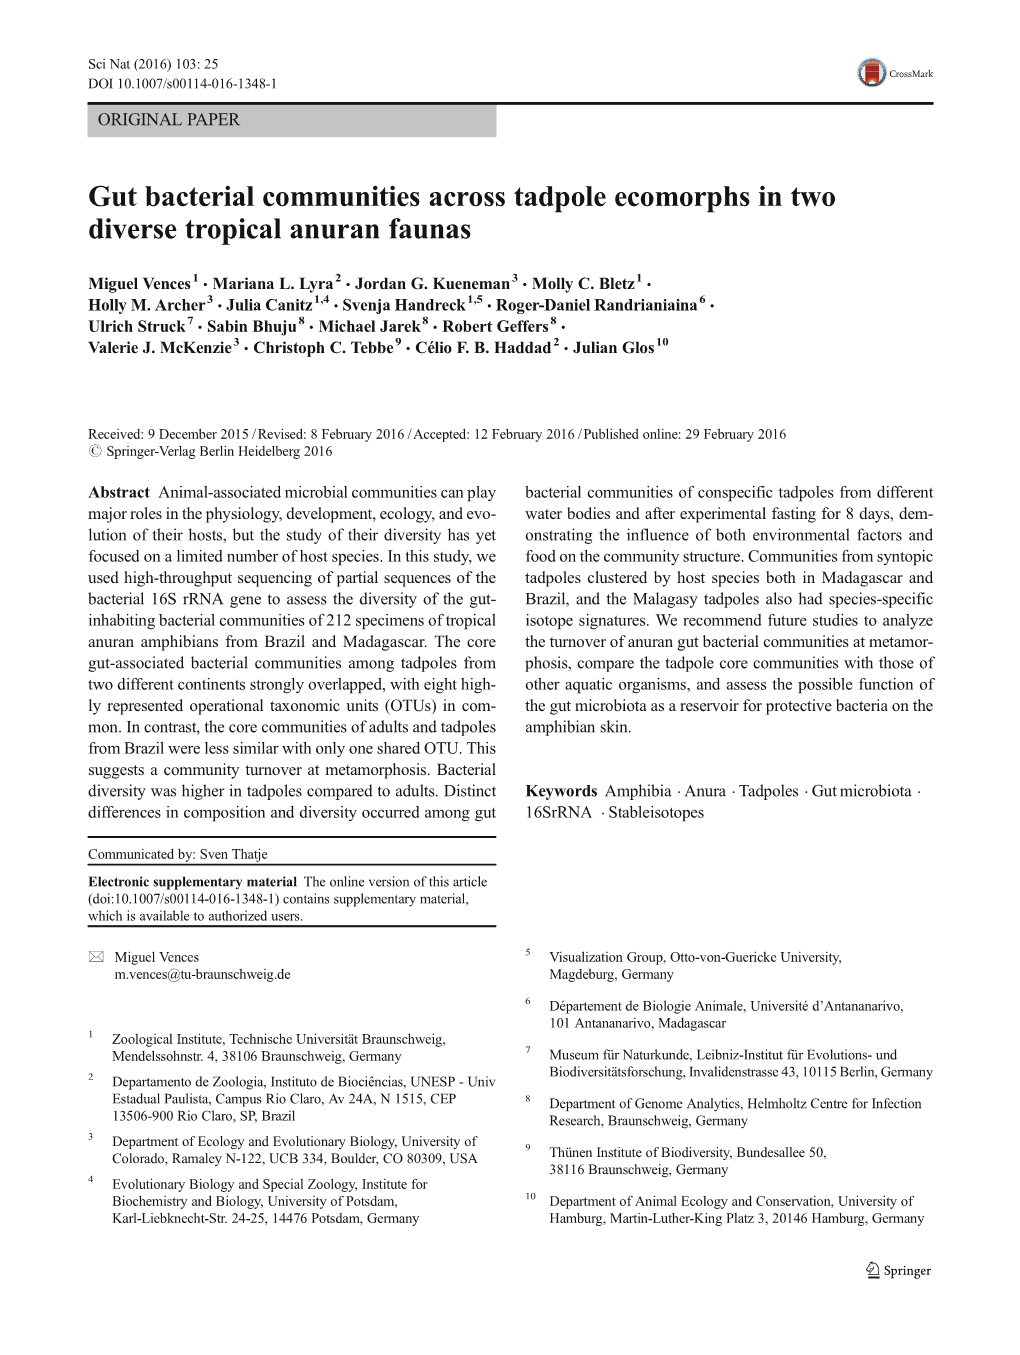 Gut Bacterial Communities Across Tadpole Ecomorphs in Two Diverse Tropical Anuran Faunas